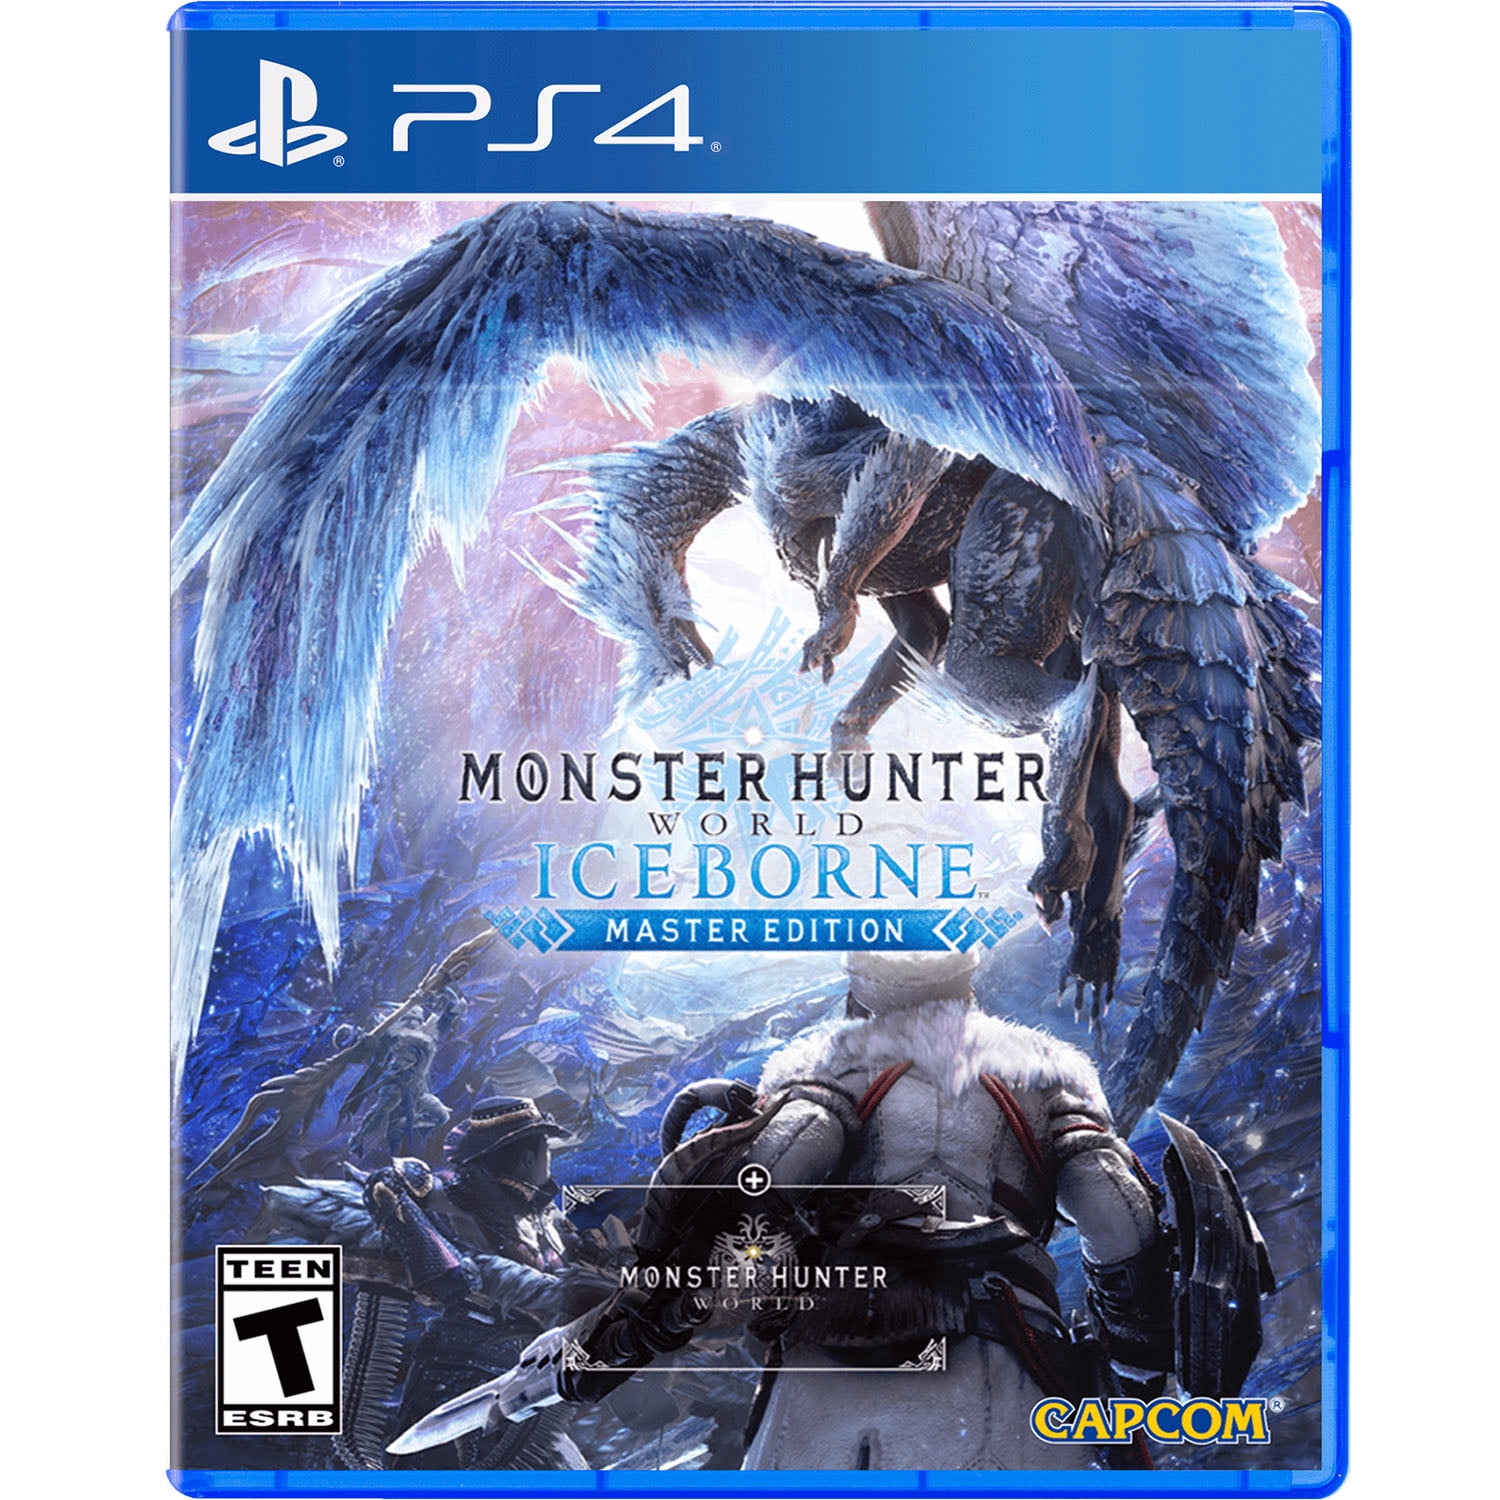 Civic velstand Springe Monster Hunter World: Iceborne Master Edition, Capcom, PlayStation 4,  [Physical], 013388560547 - Walmart.com